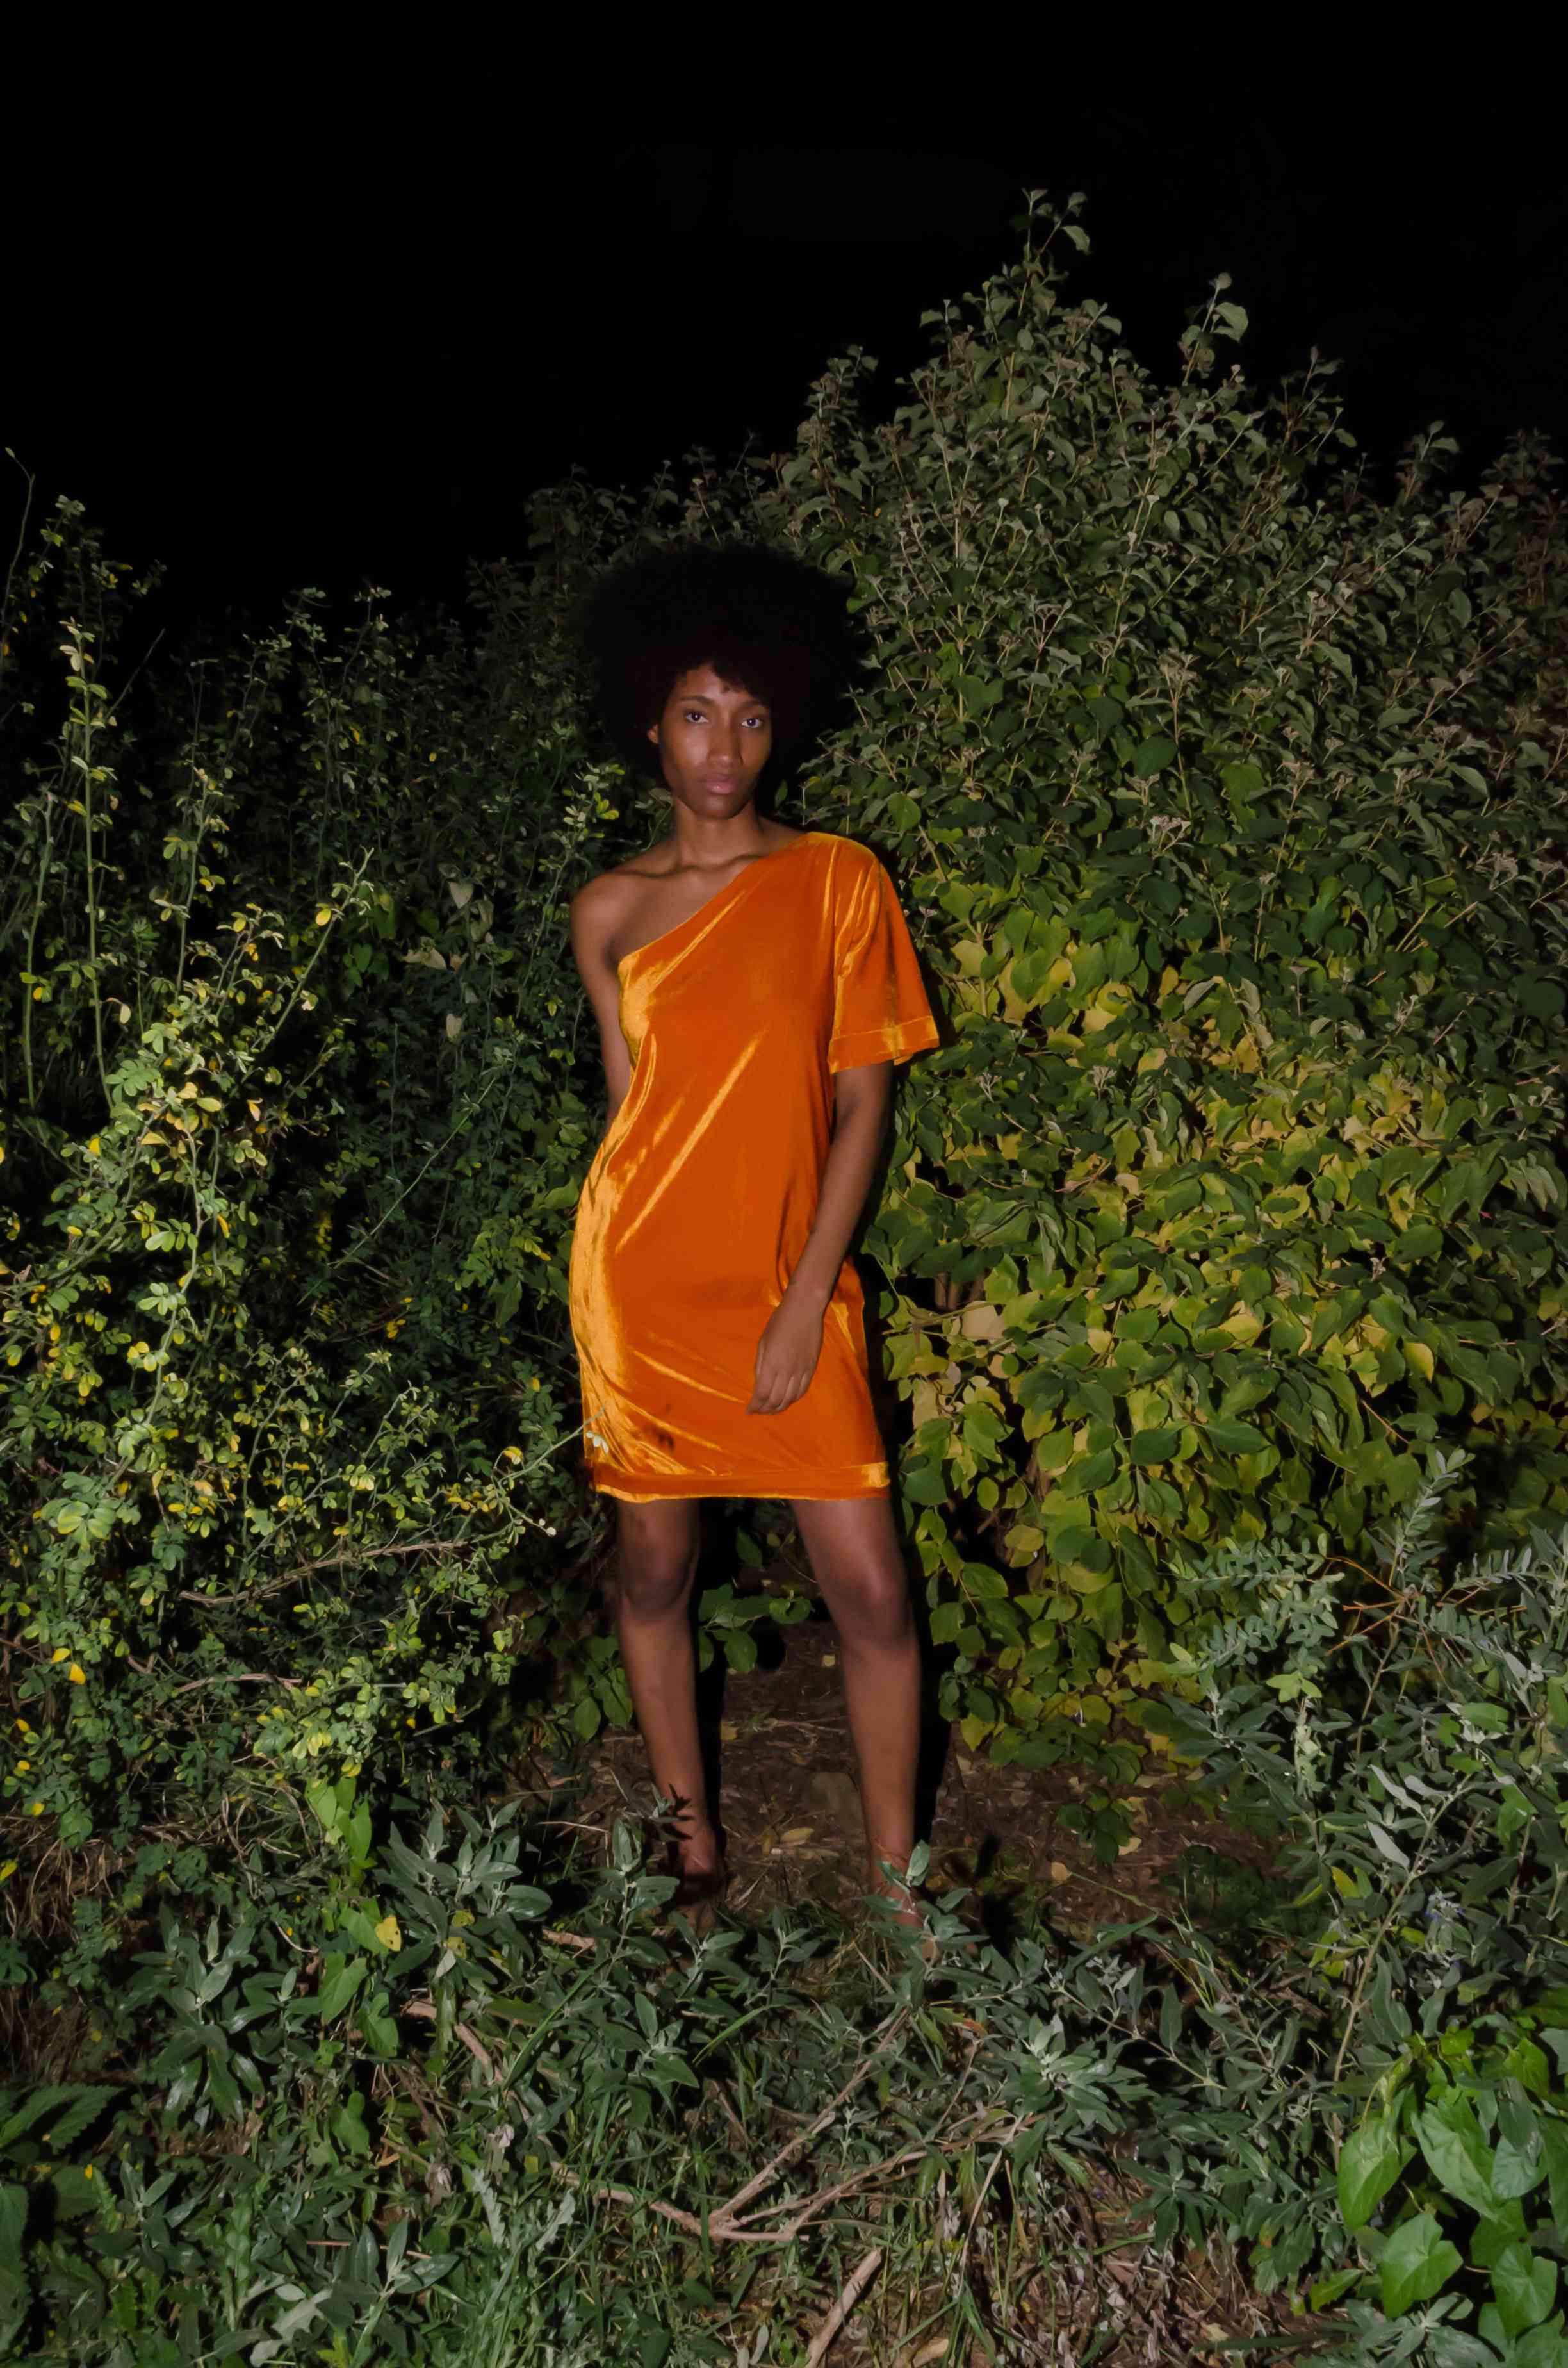 The Dahomey Amazons inspired IAMISIGO’s Spring/Summer 2018 Collection